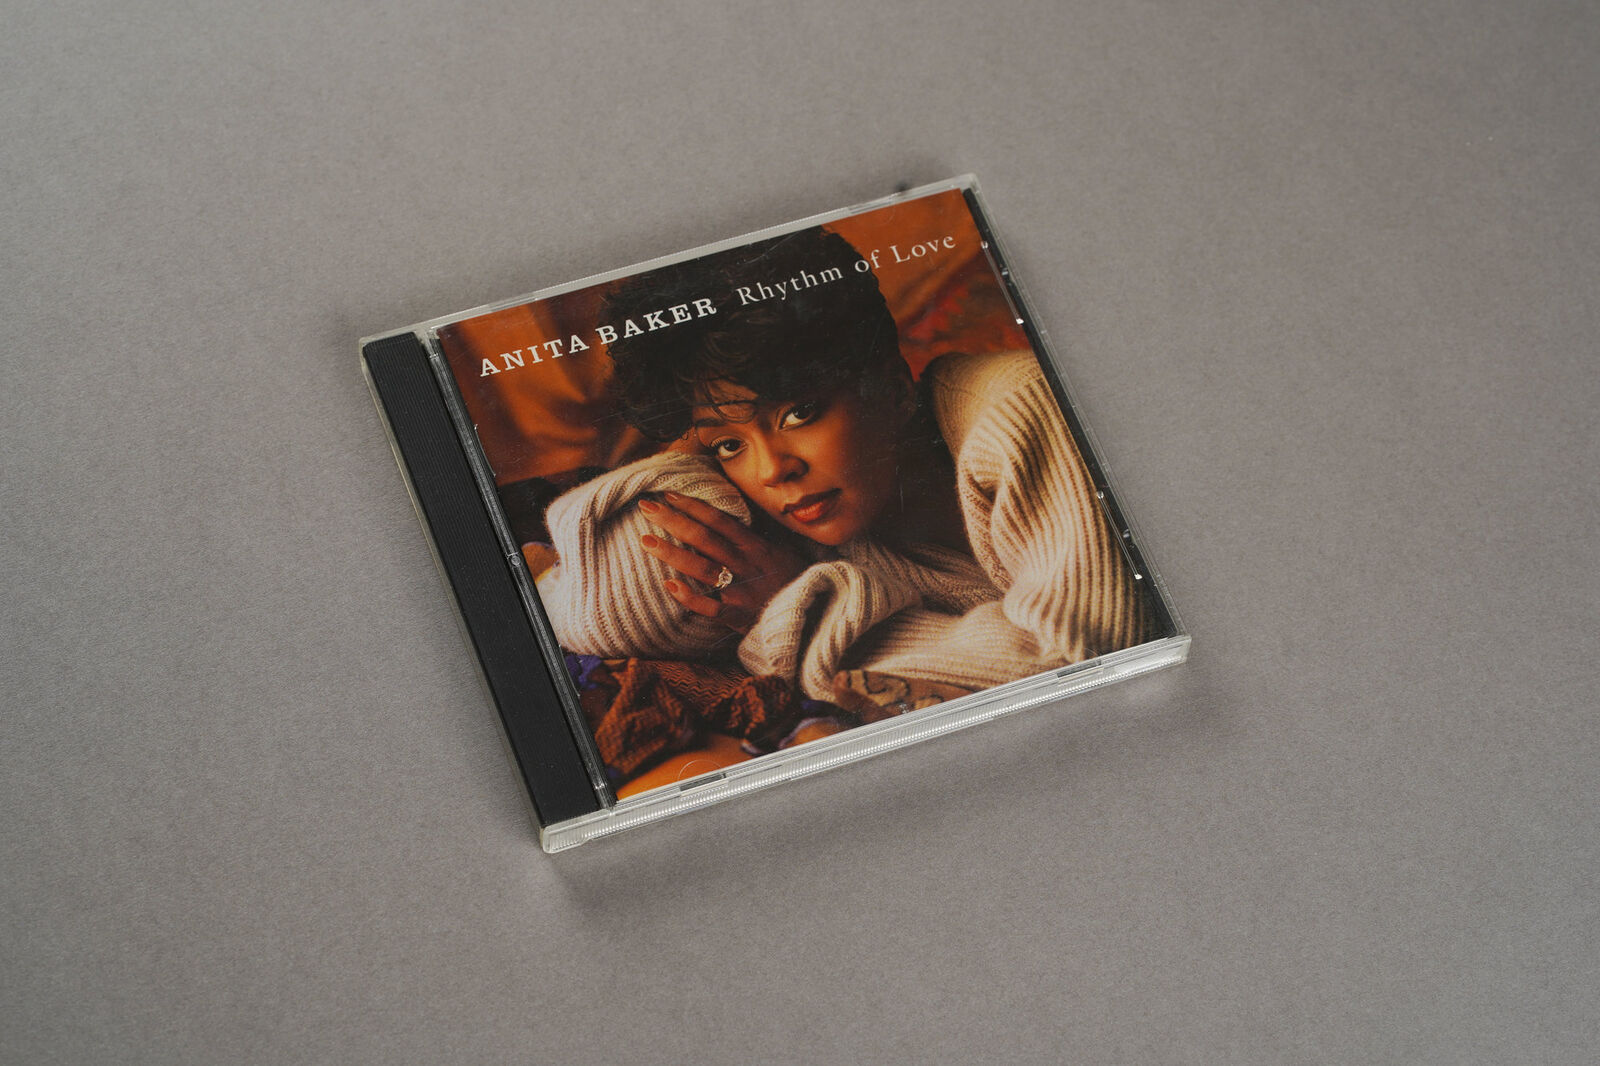 Anita Baker - Rhythm of Love - 1994 Original CD Compact Disc Album